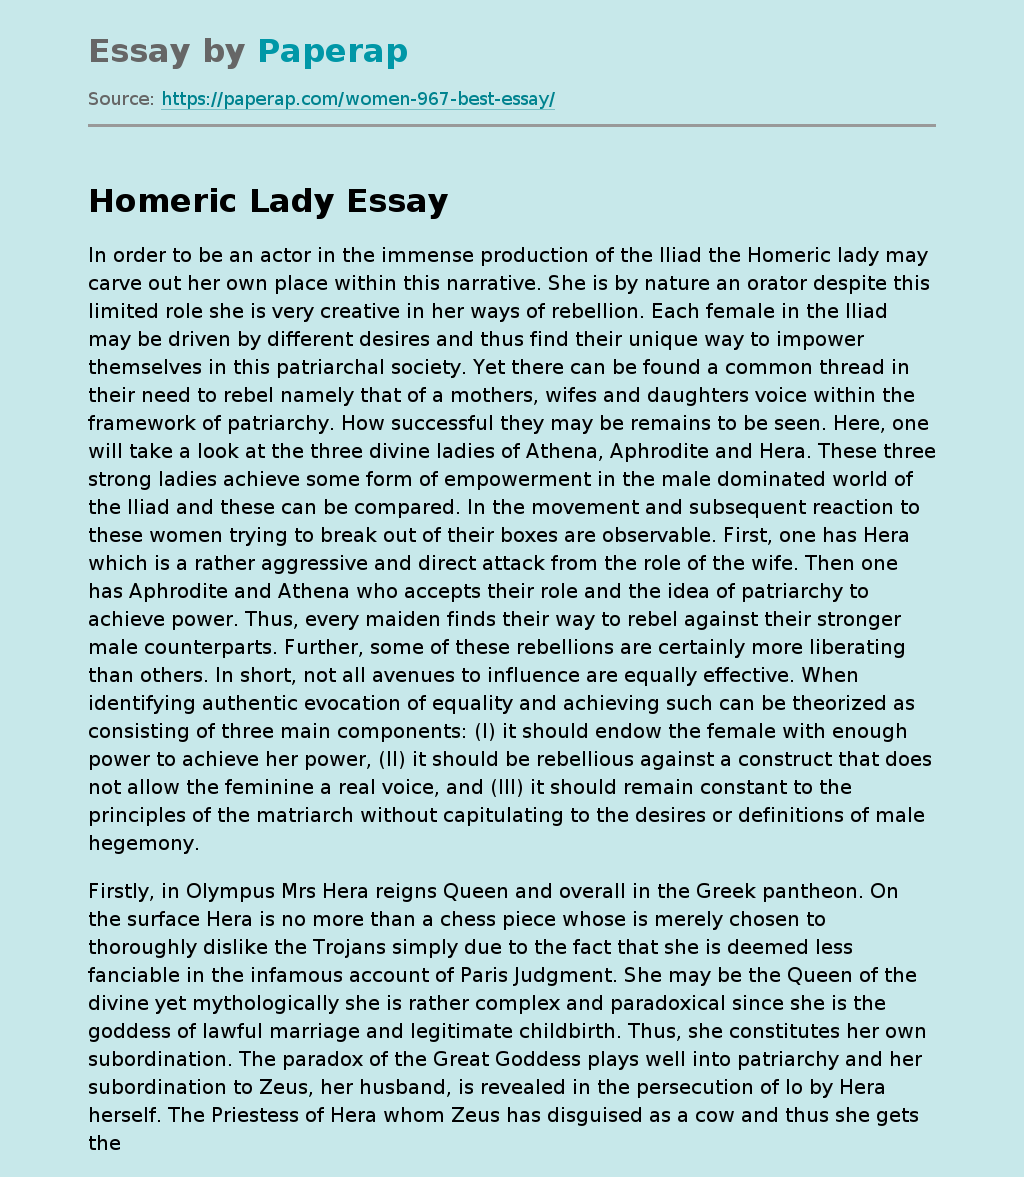 Homeric Lady